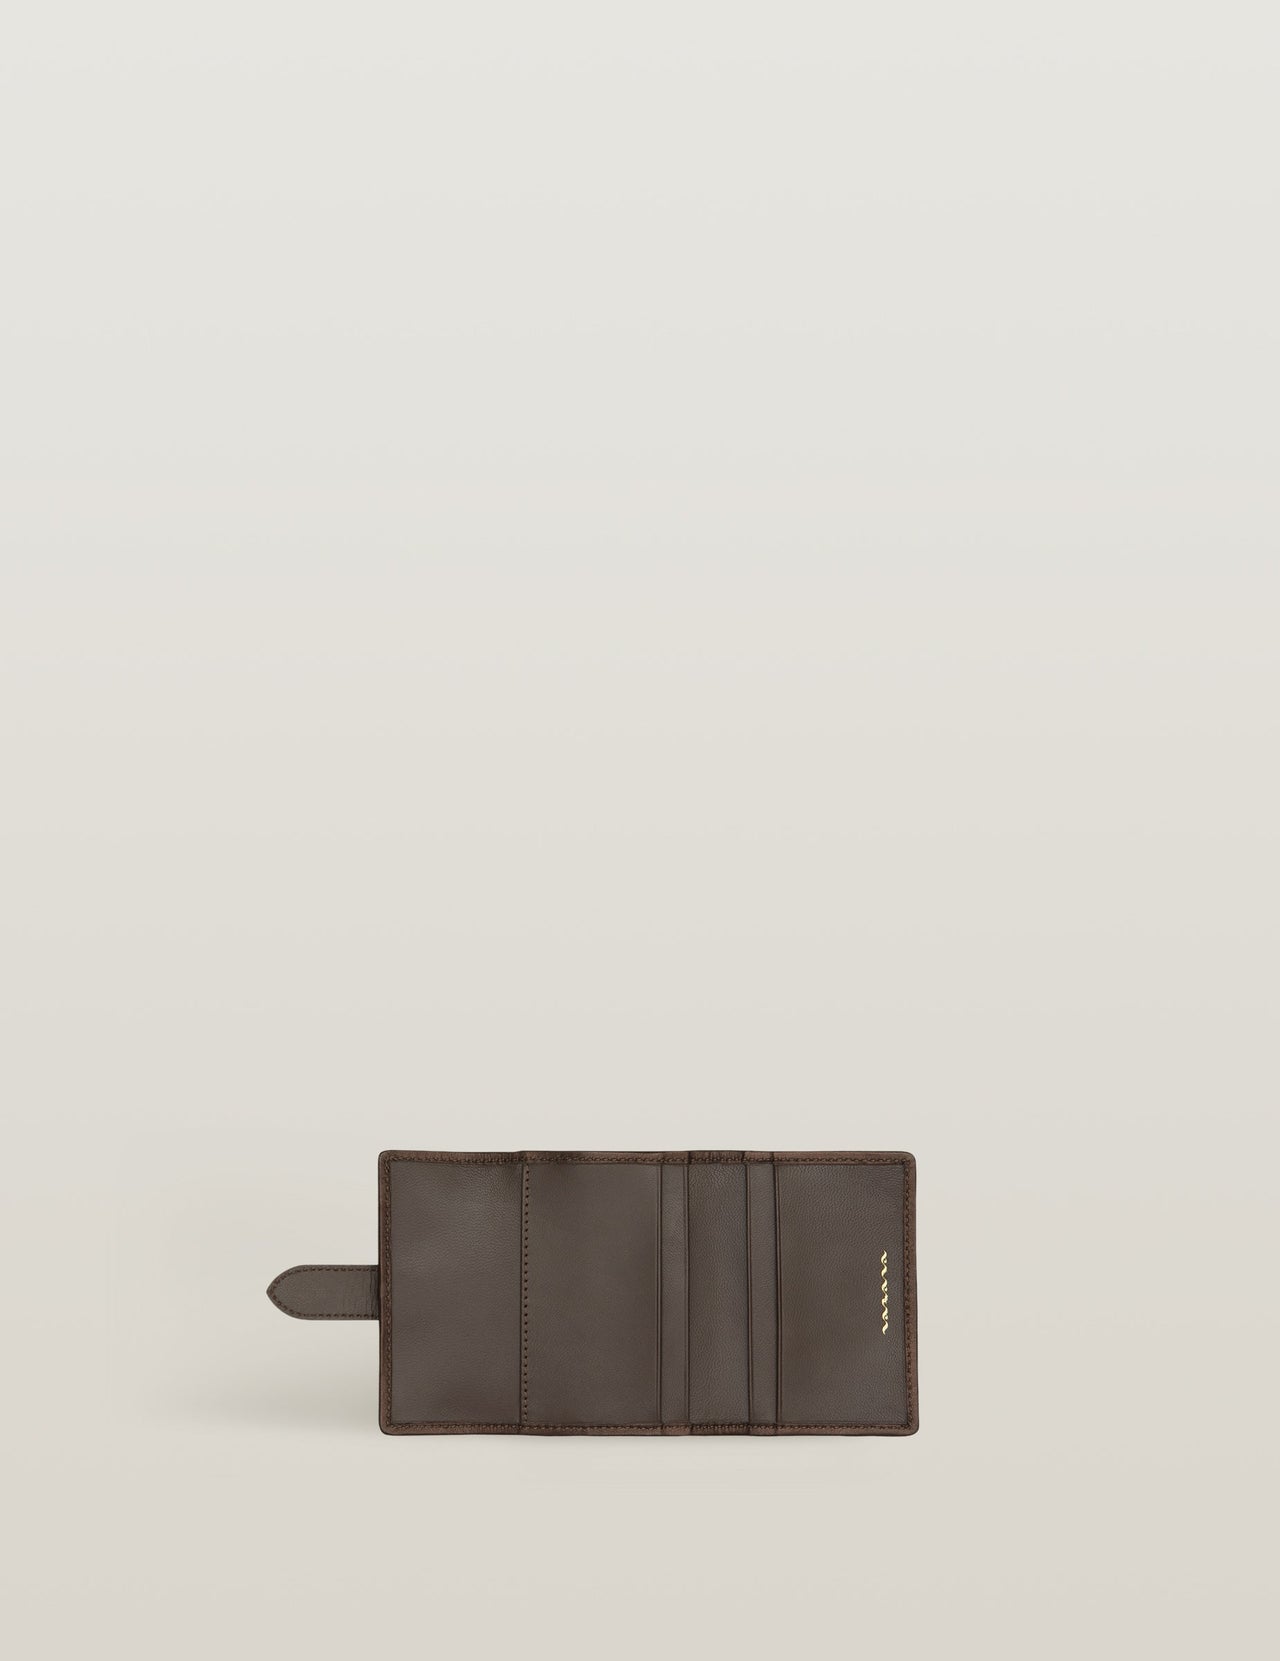  Metallic Brown Handwoven Leather Card Holder 